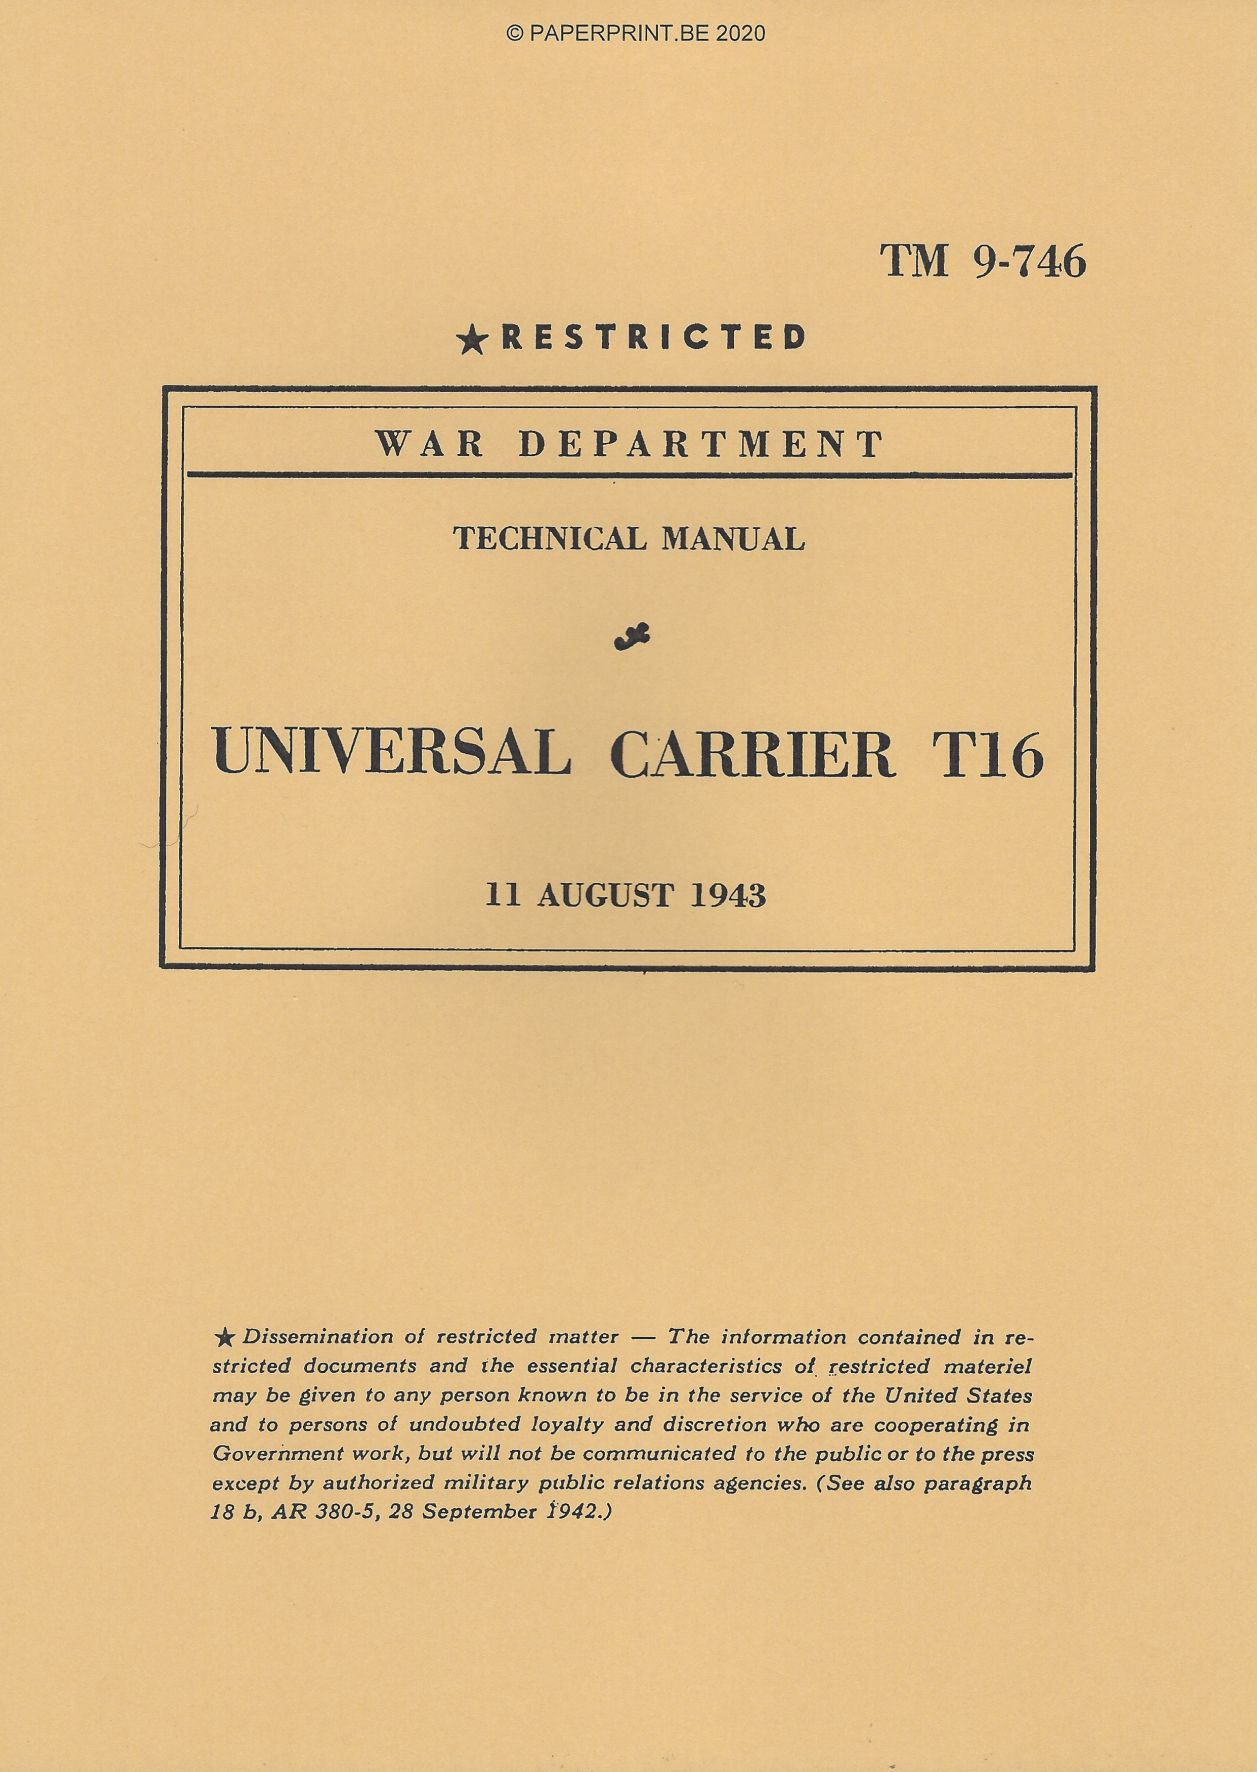 TM 9-746 US UNIVERSAL CARRIER T16